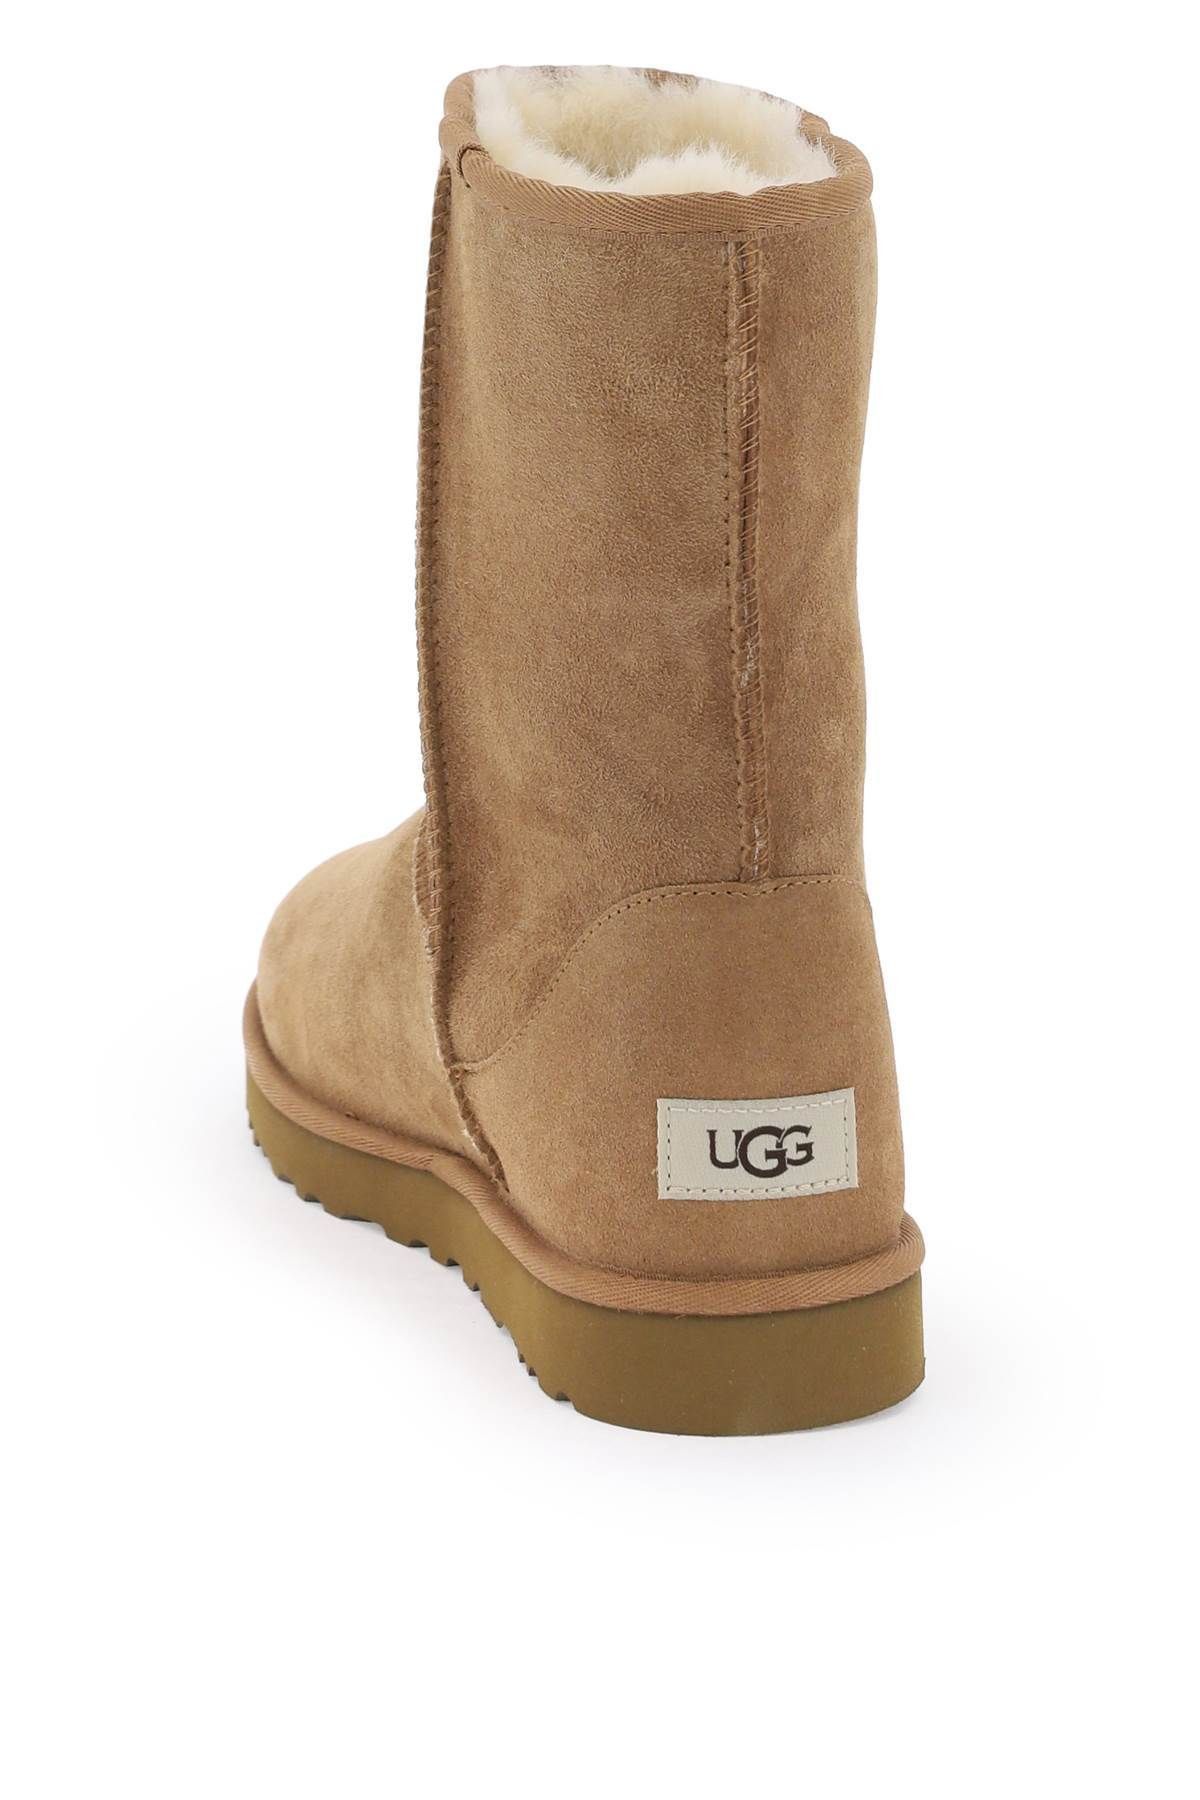 Ugg - Classic Short Boots Size EU 40 for Men - 2